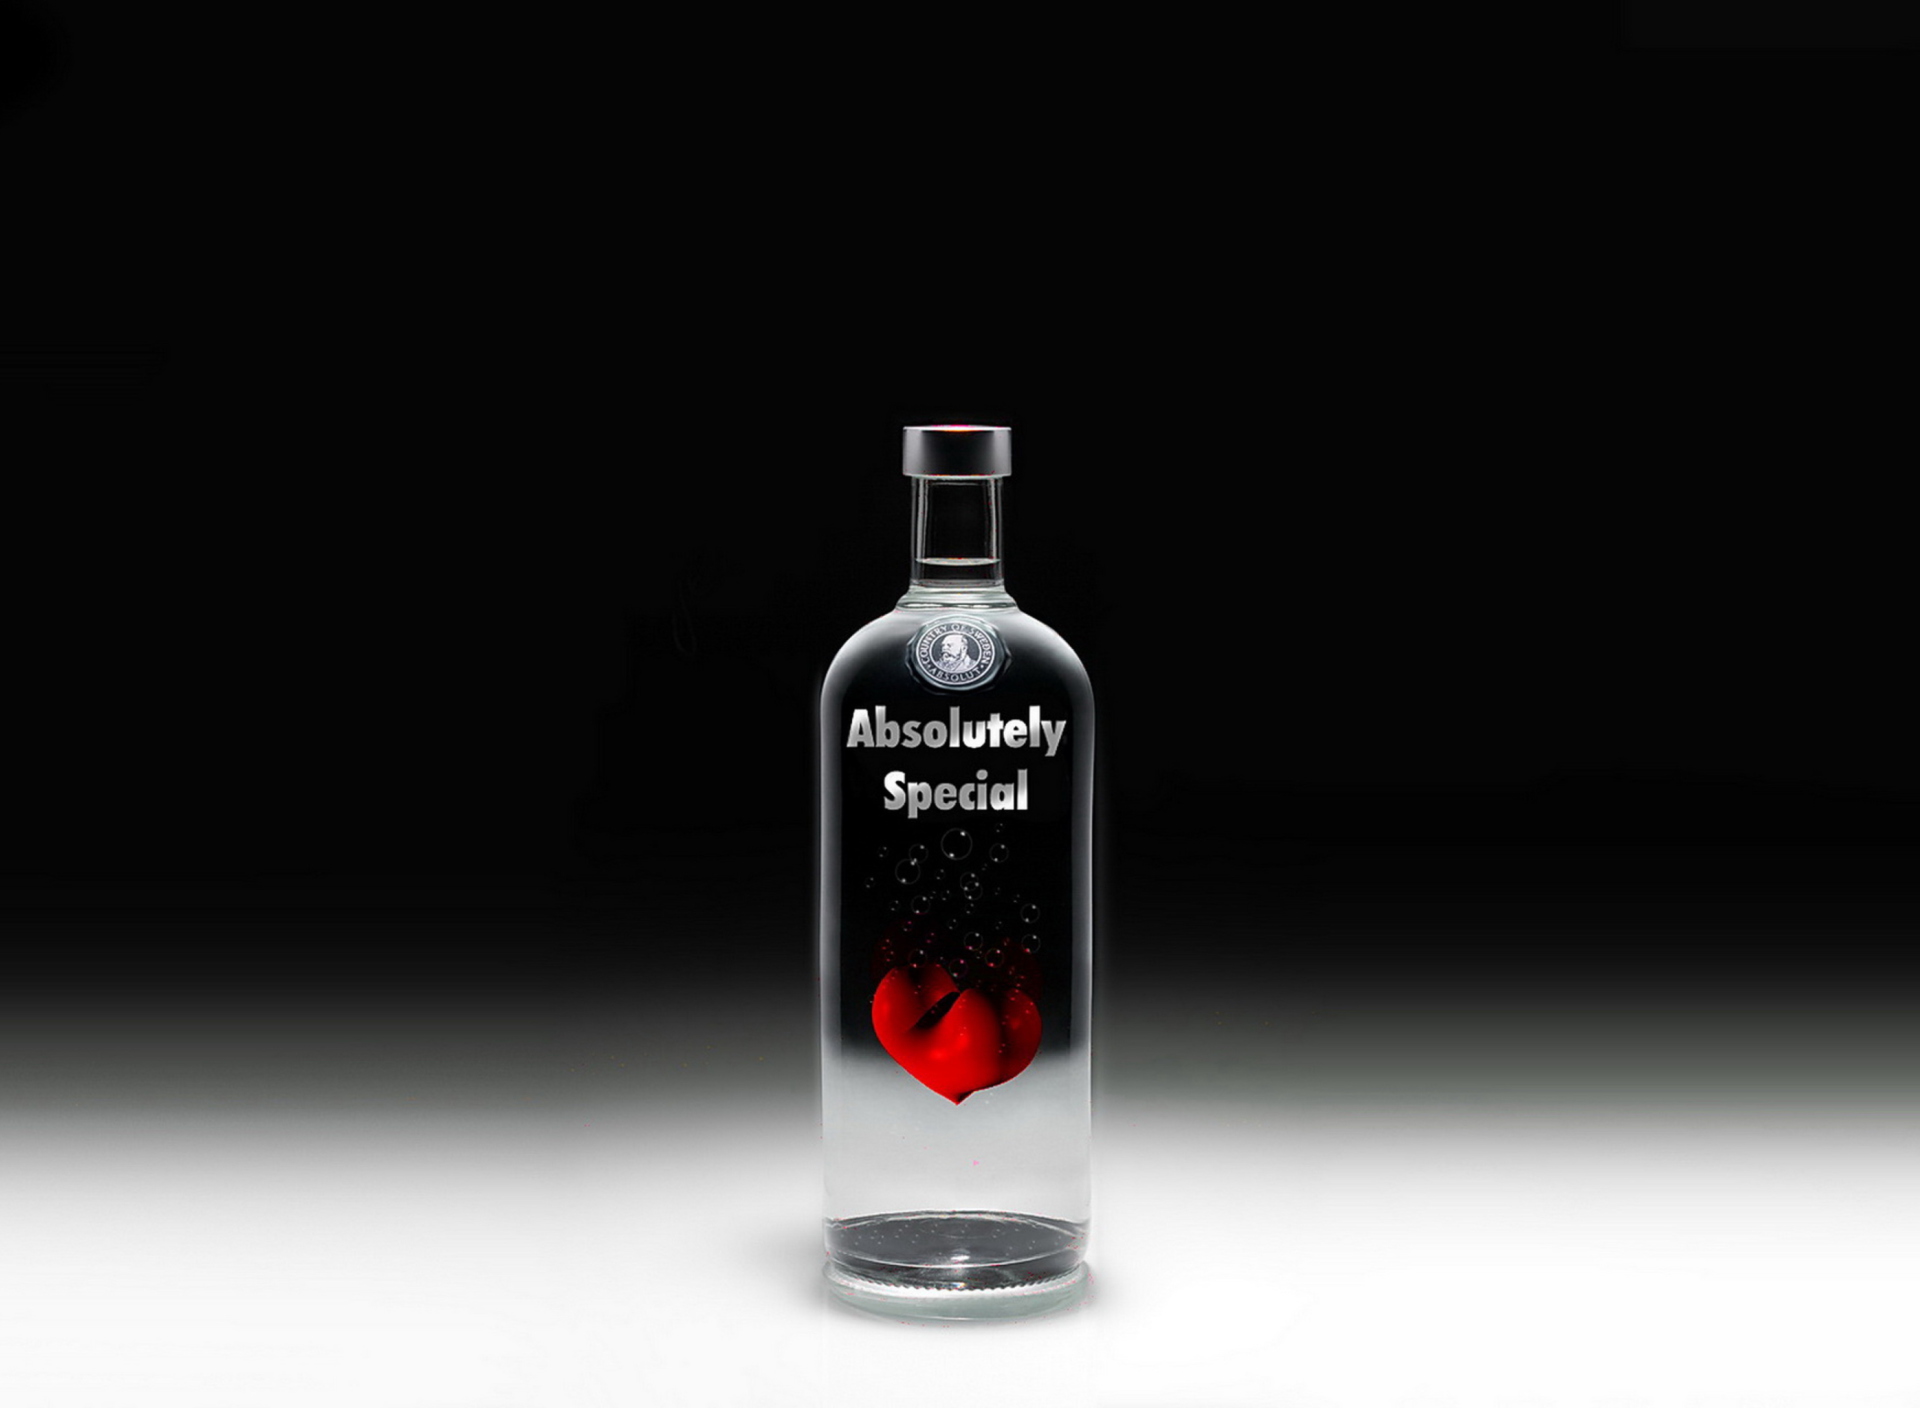 Бутылка водки на черном фоне